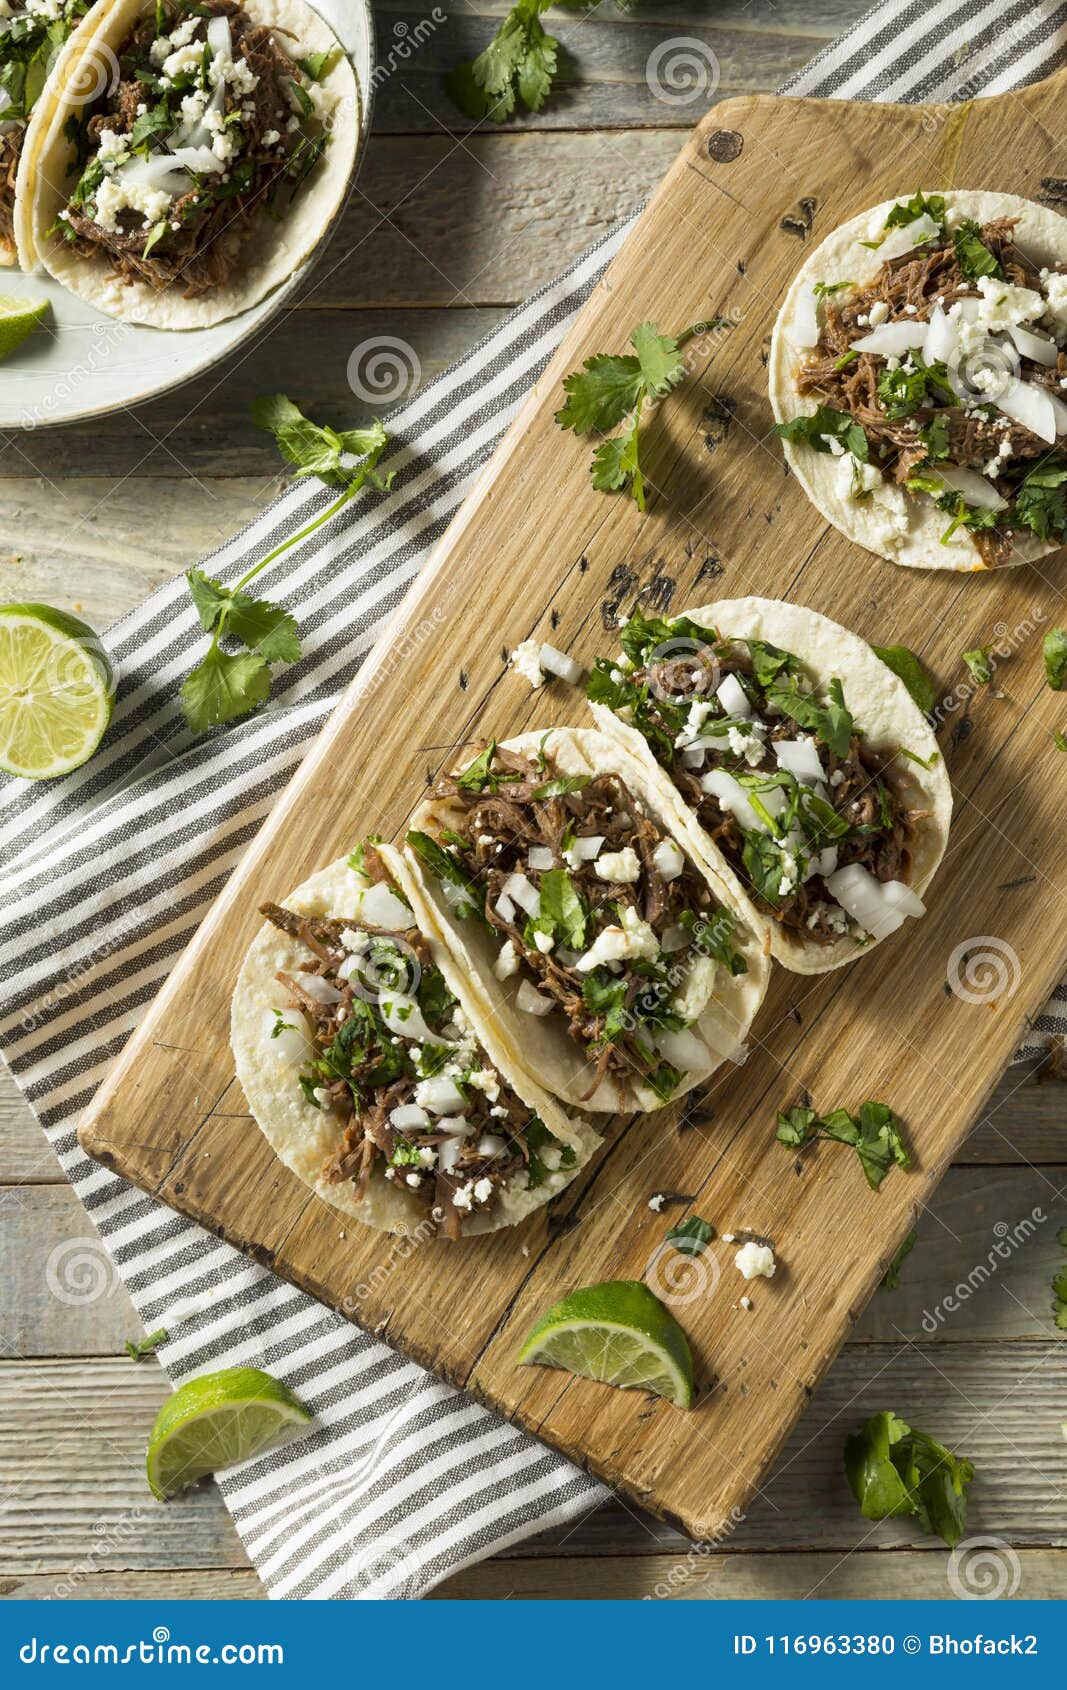 spicy homemade beef barbacoa tacos